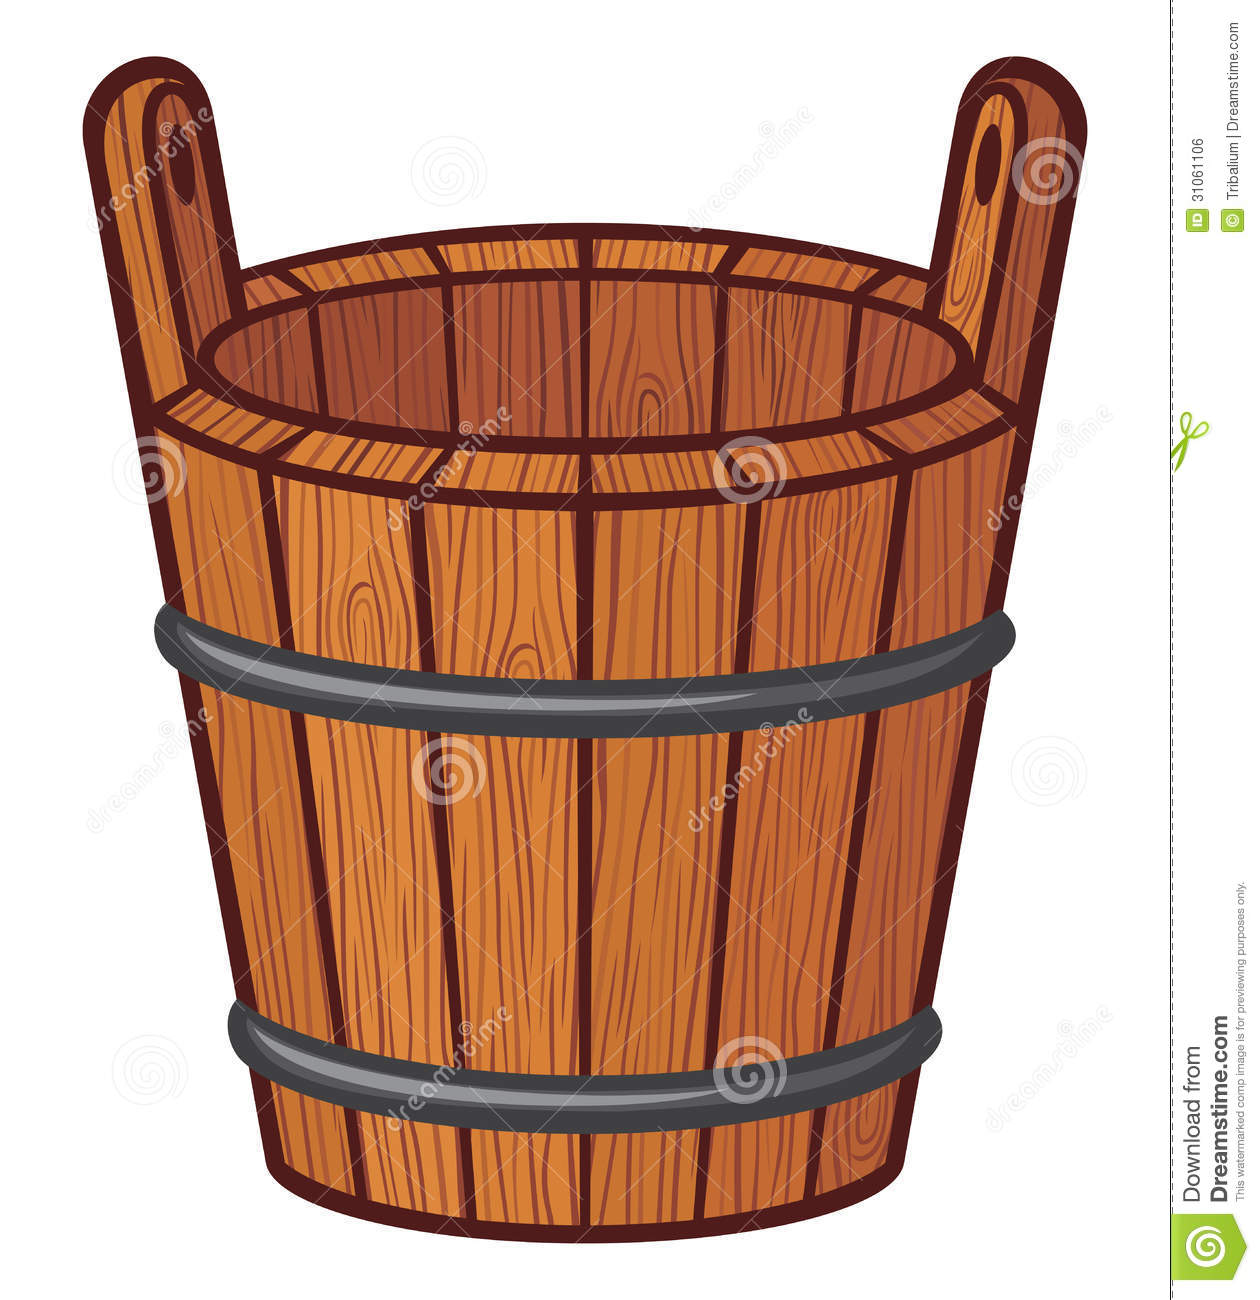 Wooden Bucket Royalty Free Stock Image   Image  31061106